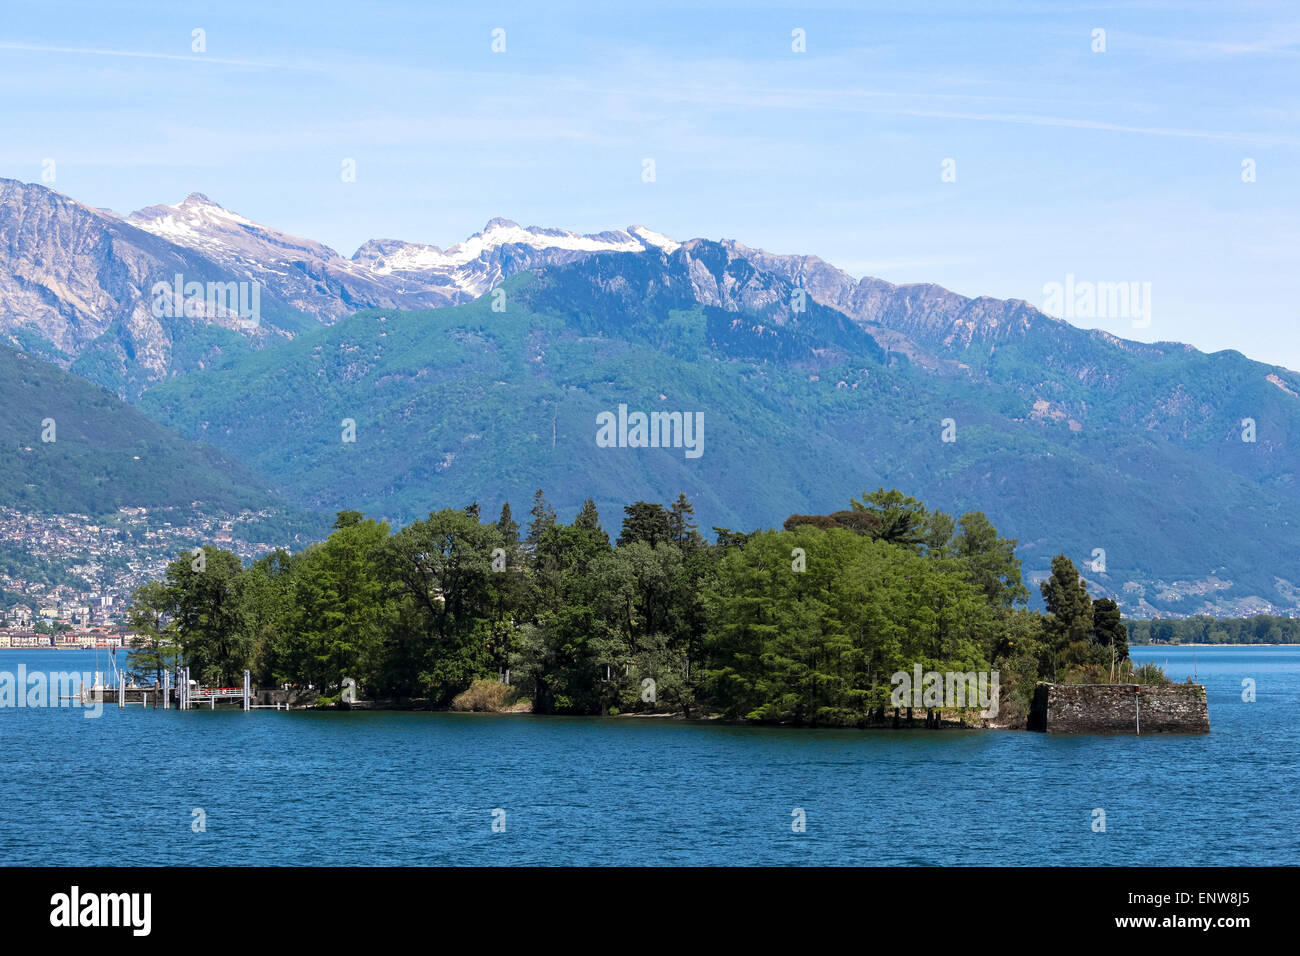 Isole di Brissago (Brissago Islands) and Swiss Alps in the background Stock Photo